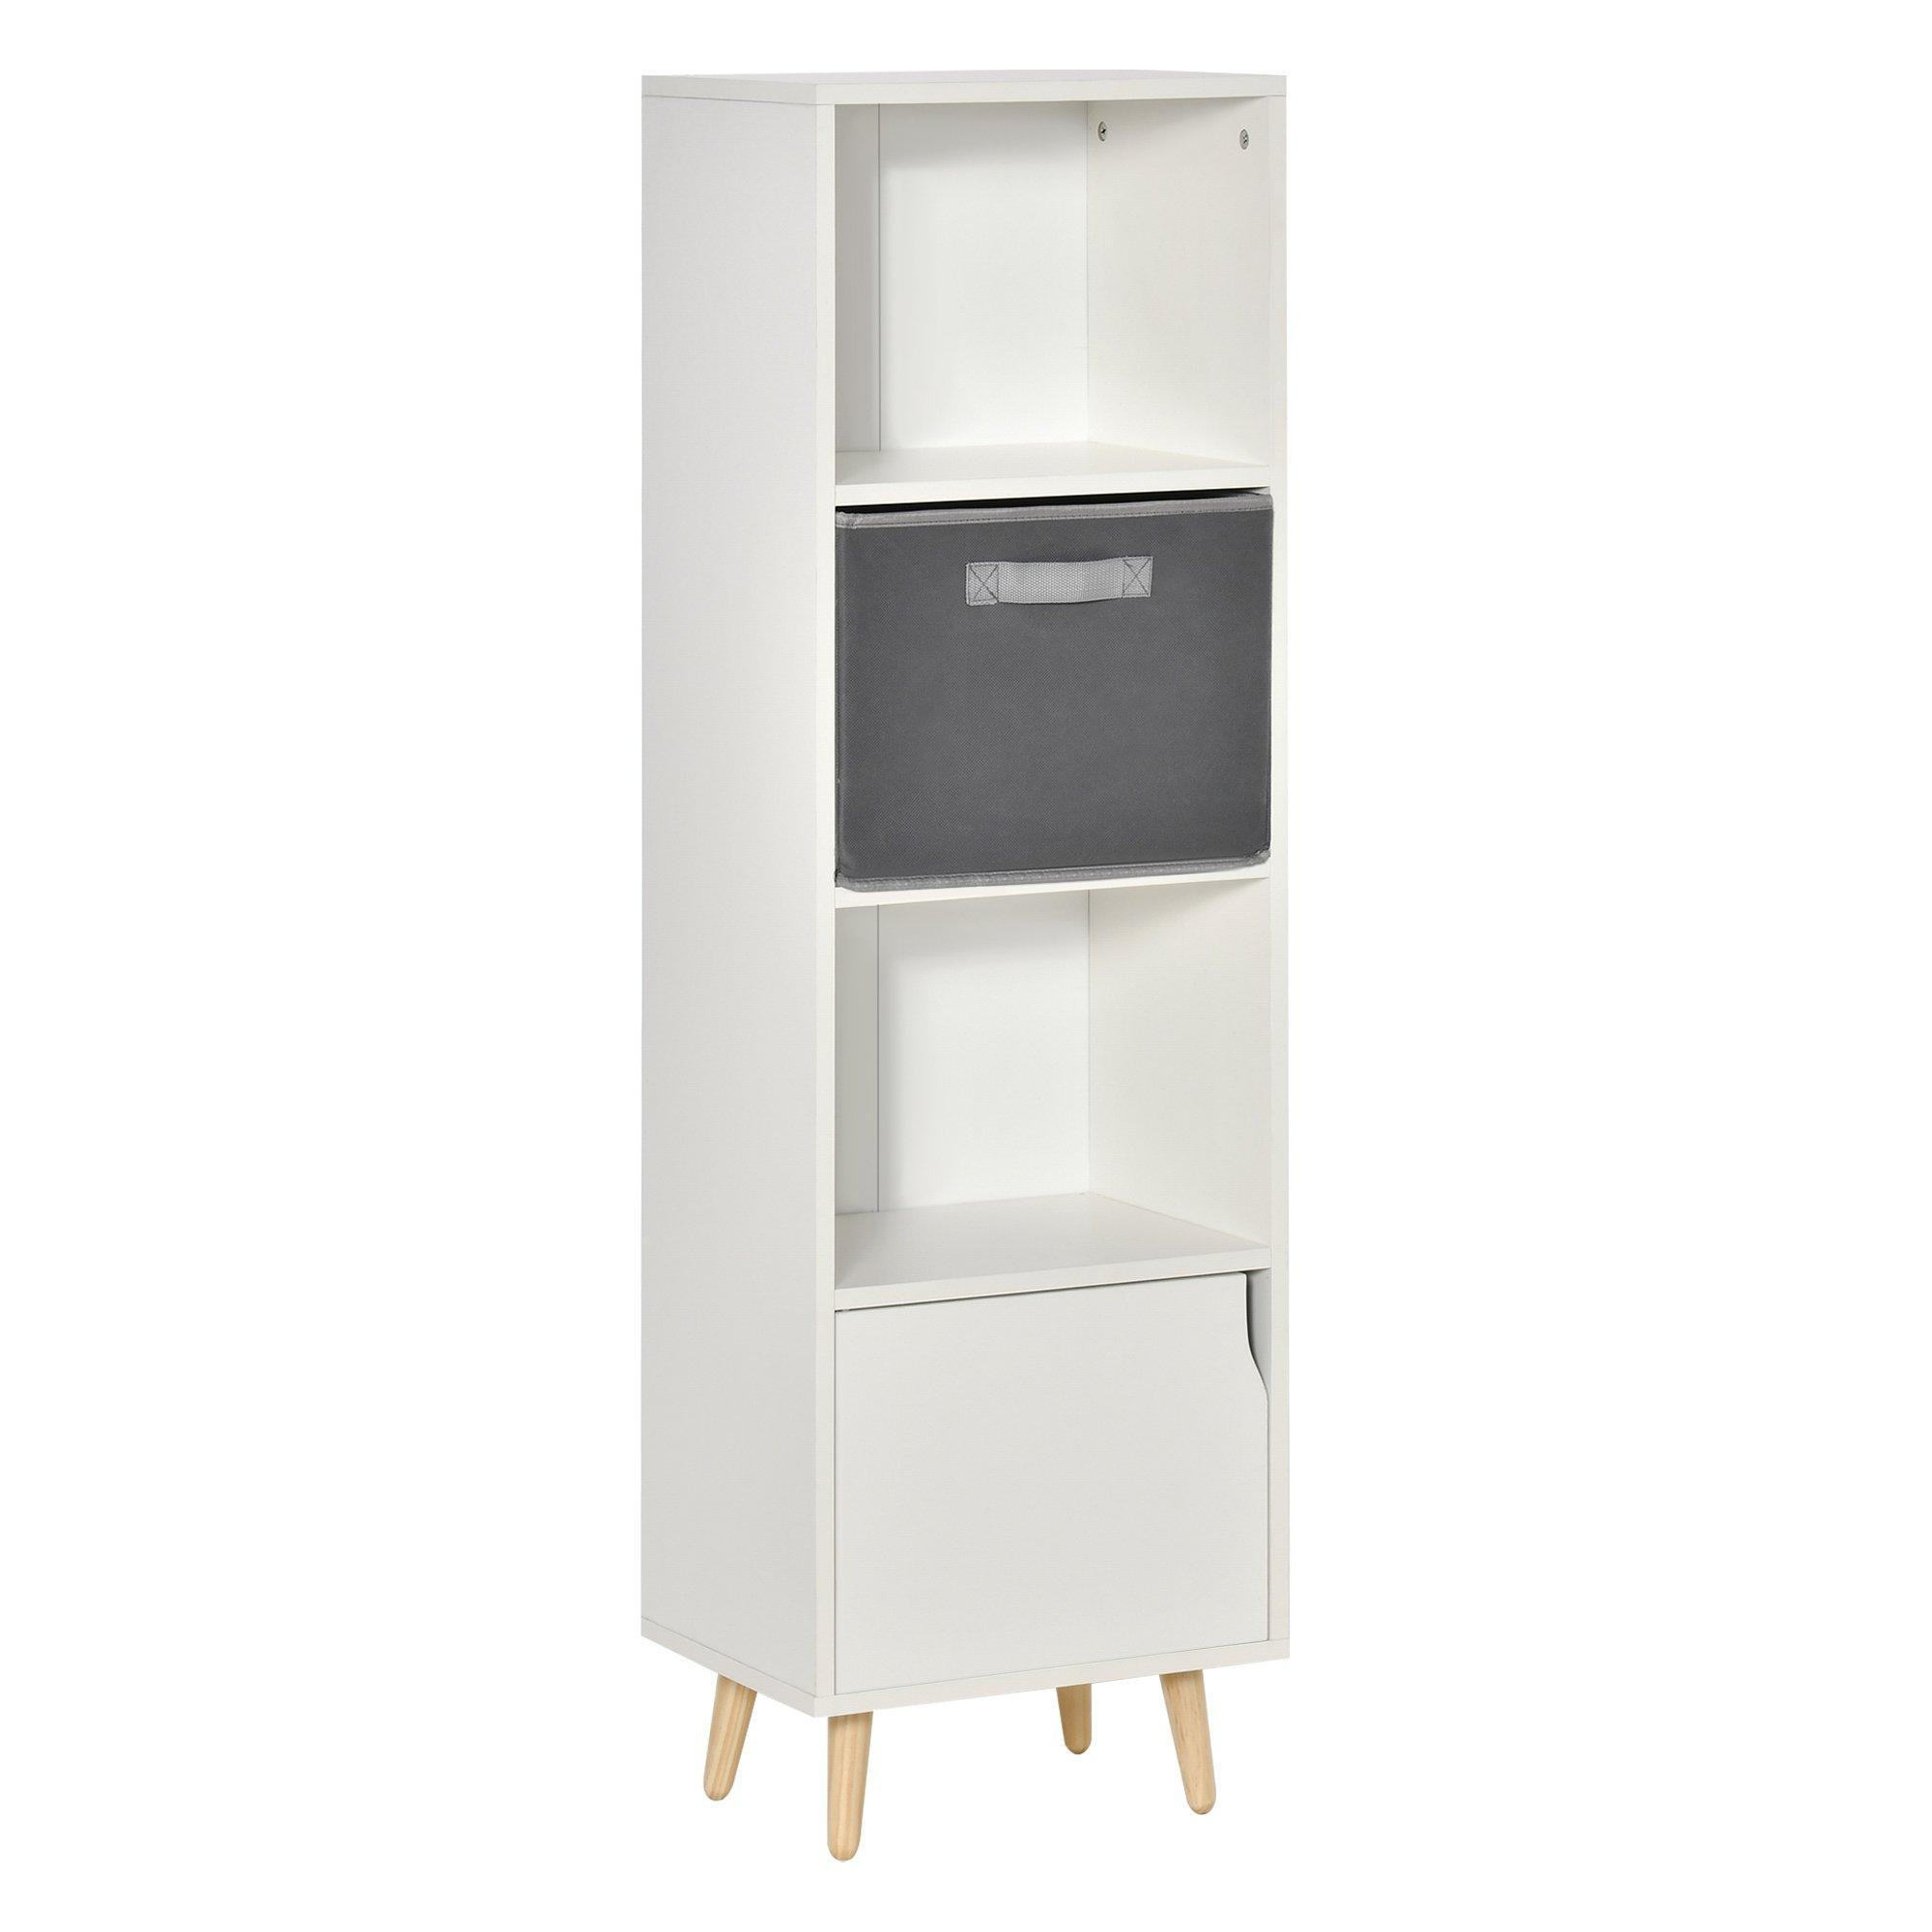 3 Tier Bookcase withDoors White Wooden Bookshelf Display Cabinet - image 1